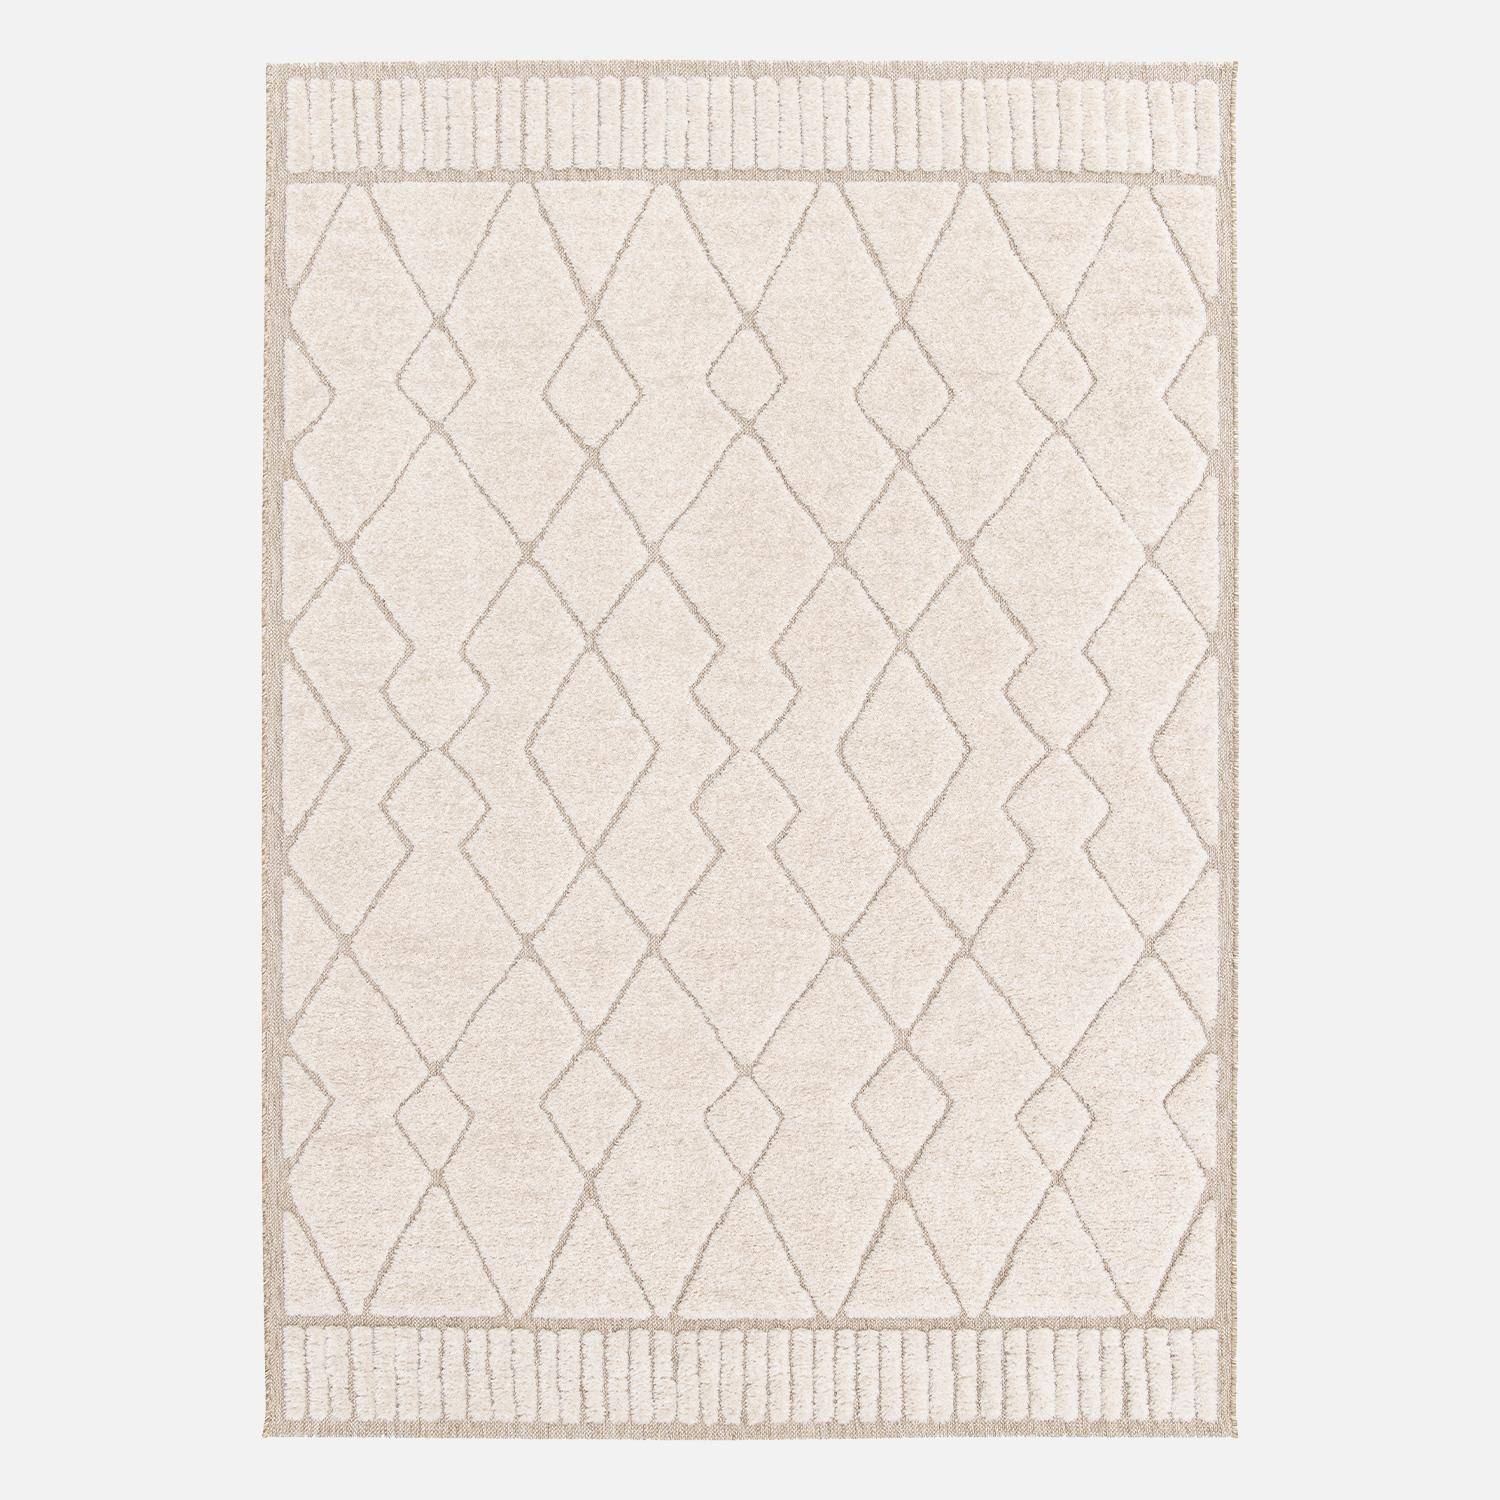 Interior carpet with Berber pattern, beige and cream, Judy, 120 x 170 cm,sweeek,Photo1